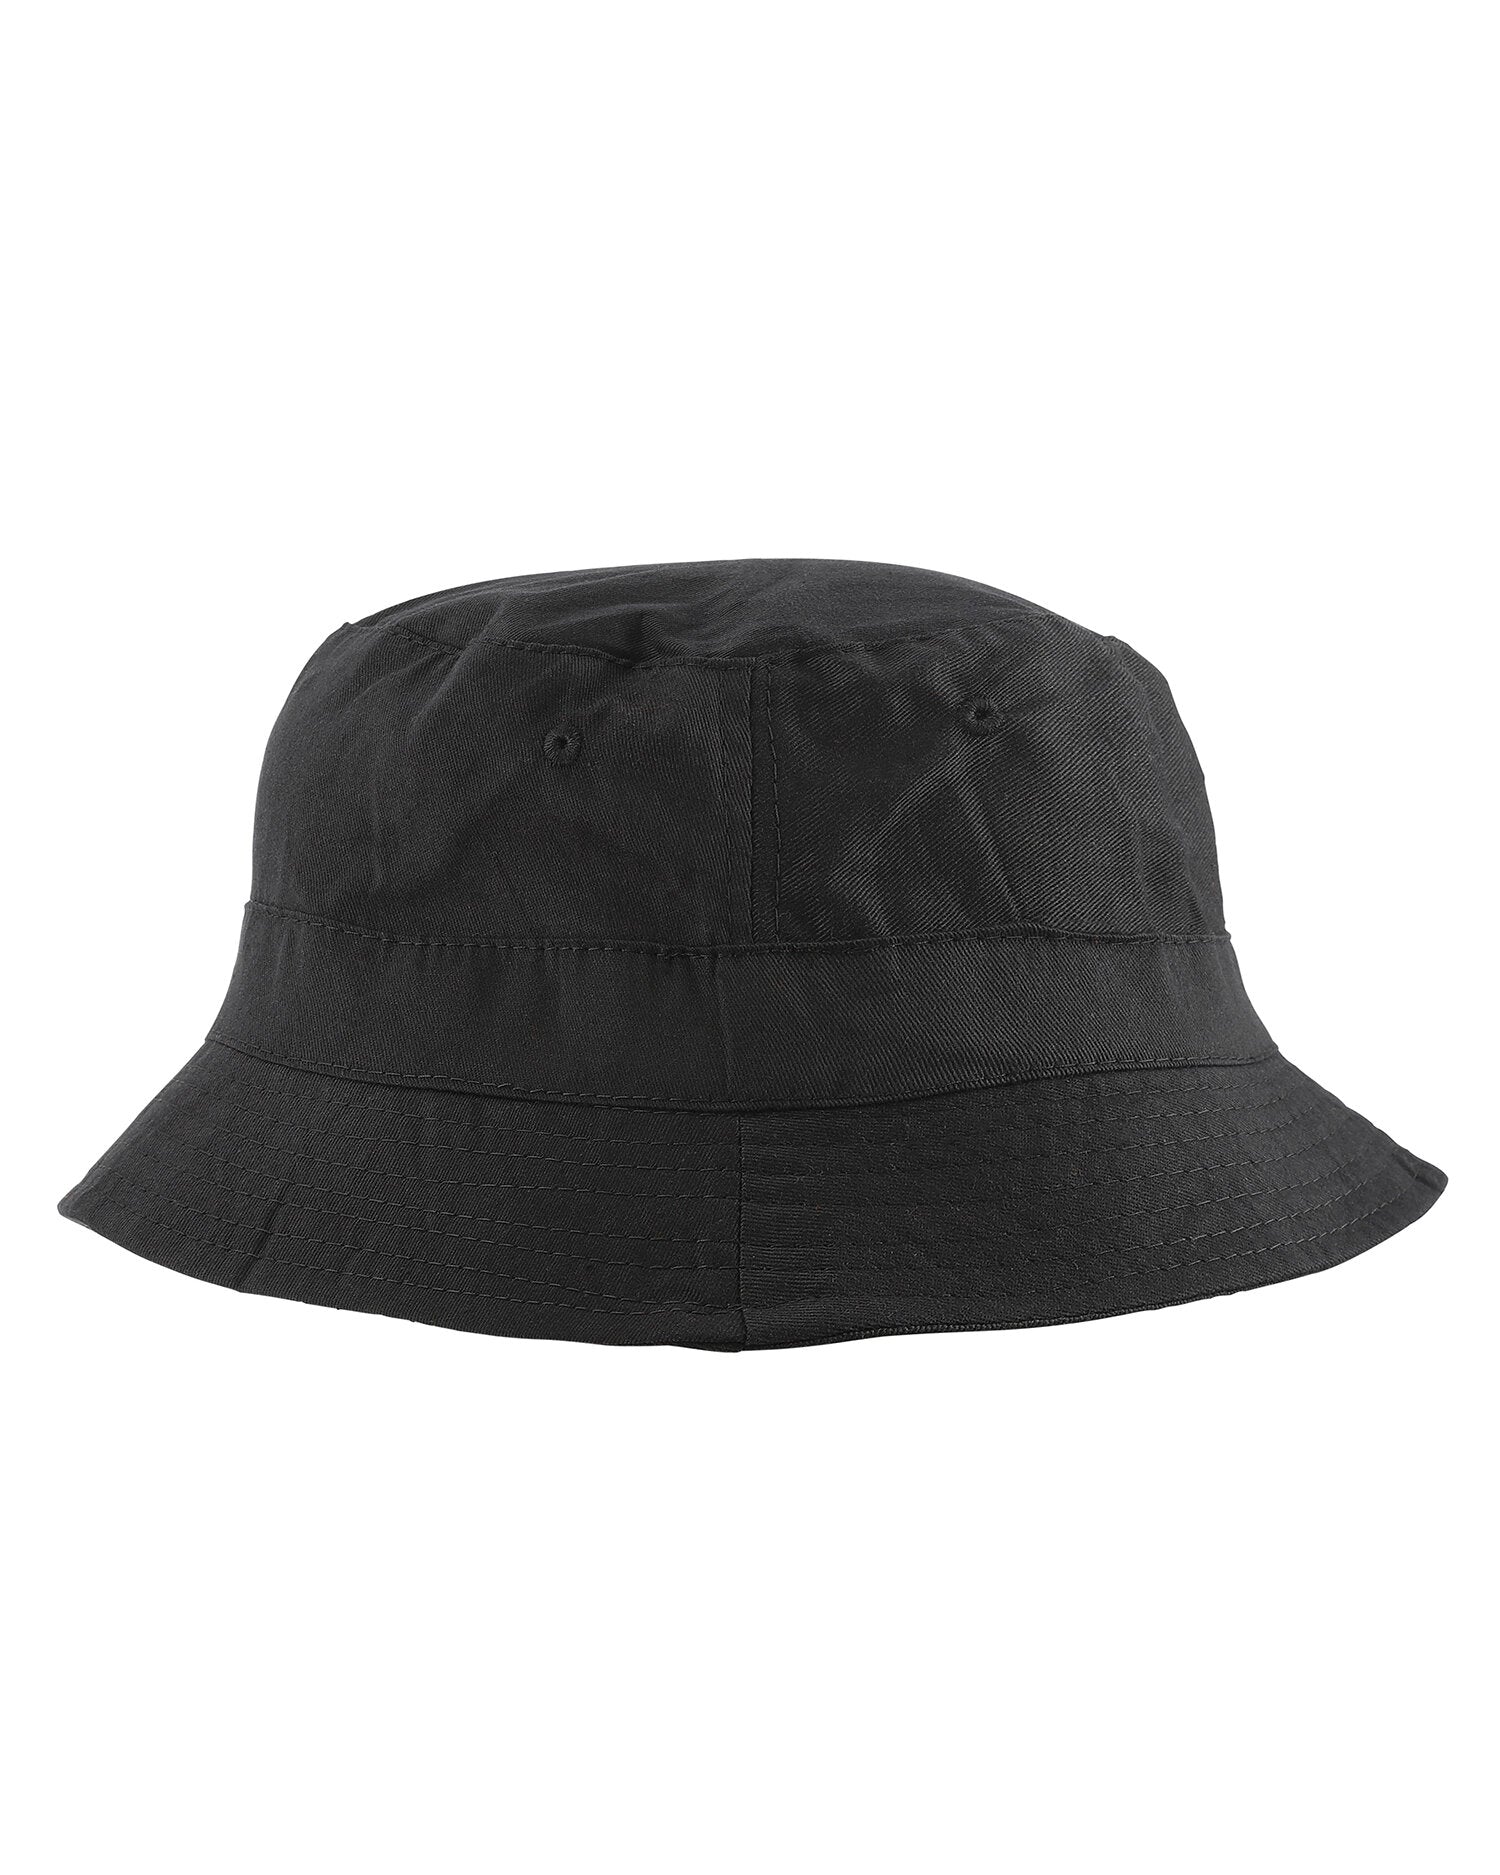 The black base bucket hat blackswing.golf - blackswing.golf Hats